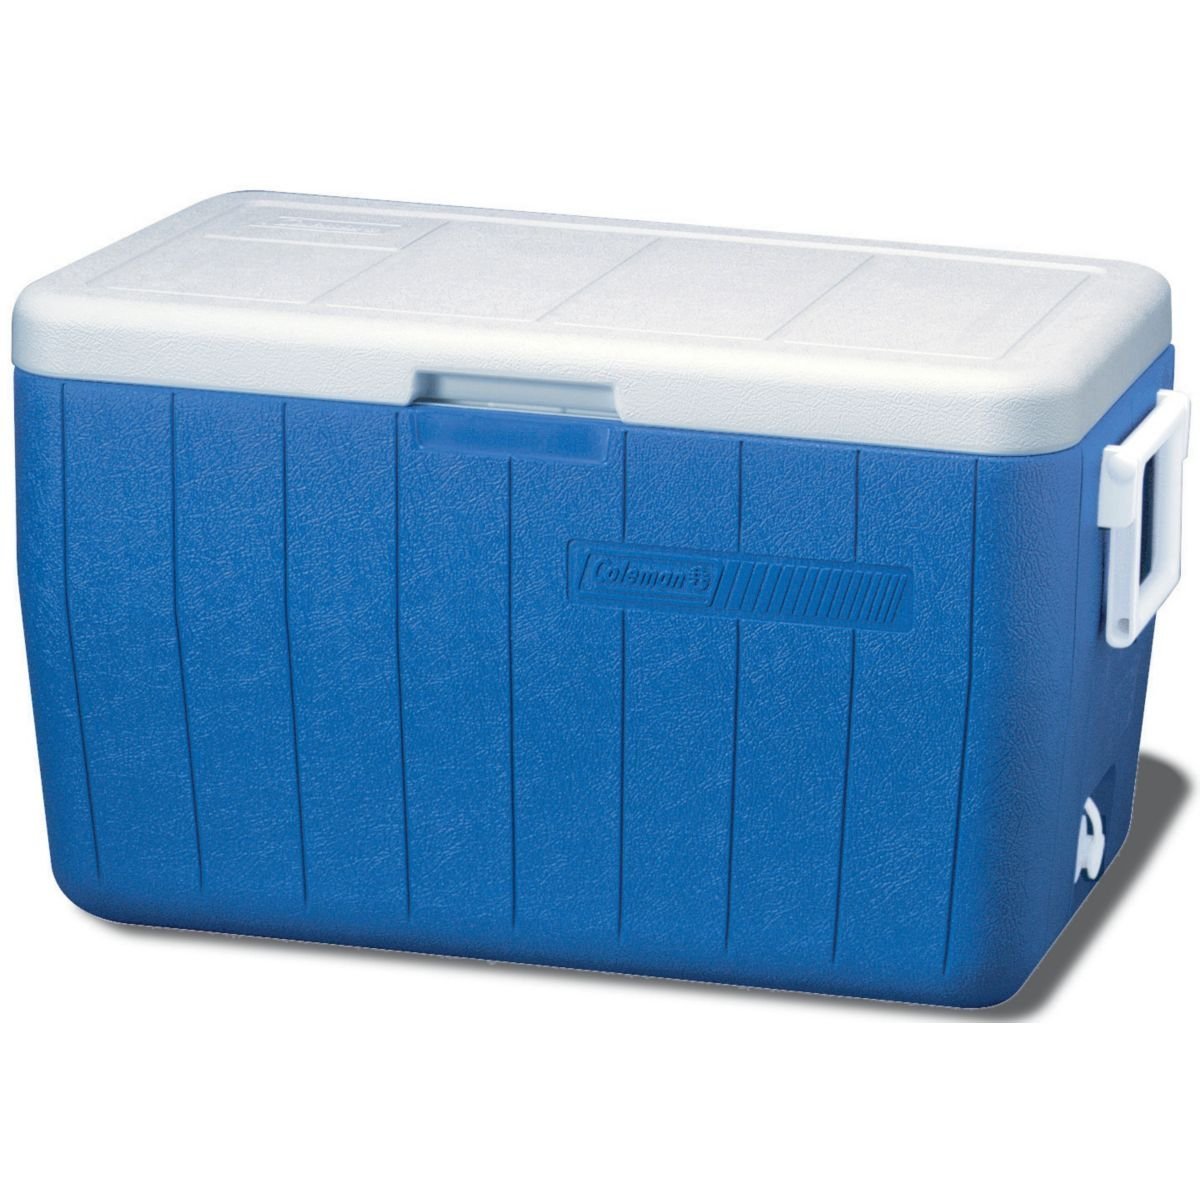 Coleman 48-Quart Cooler in Blue – Just $21.21!